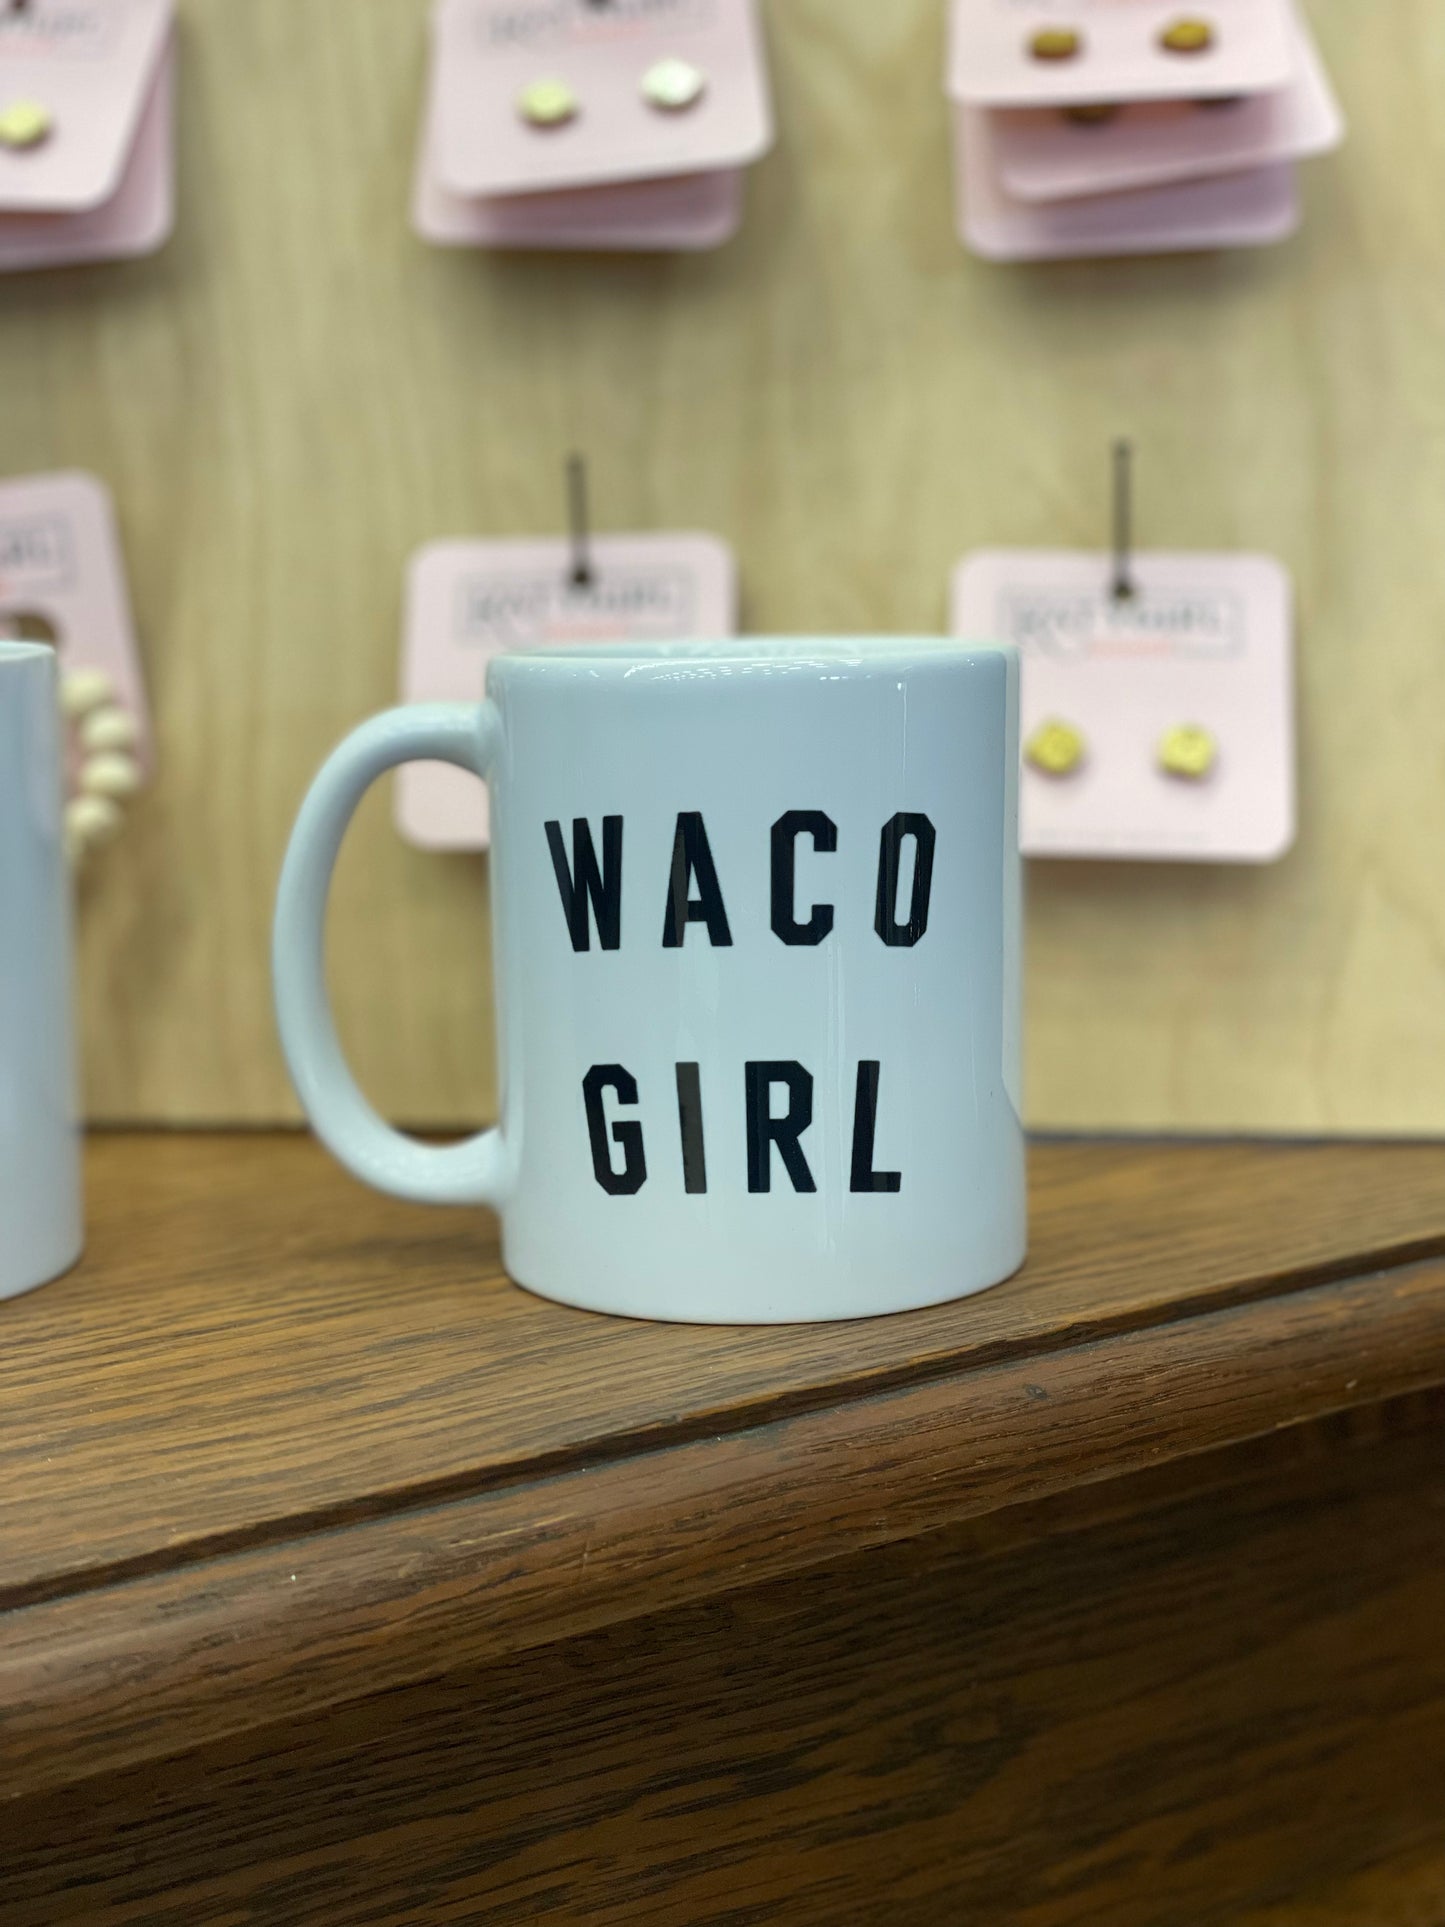 Waco Girl mug